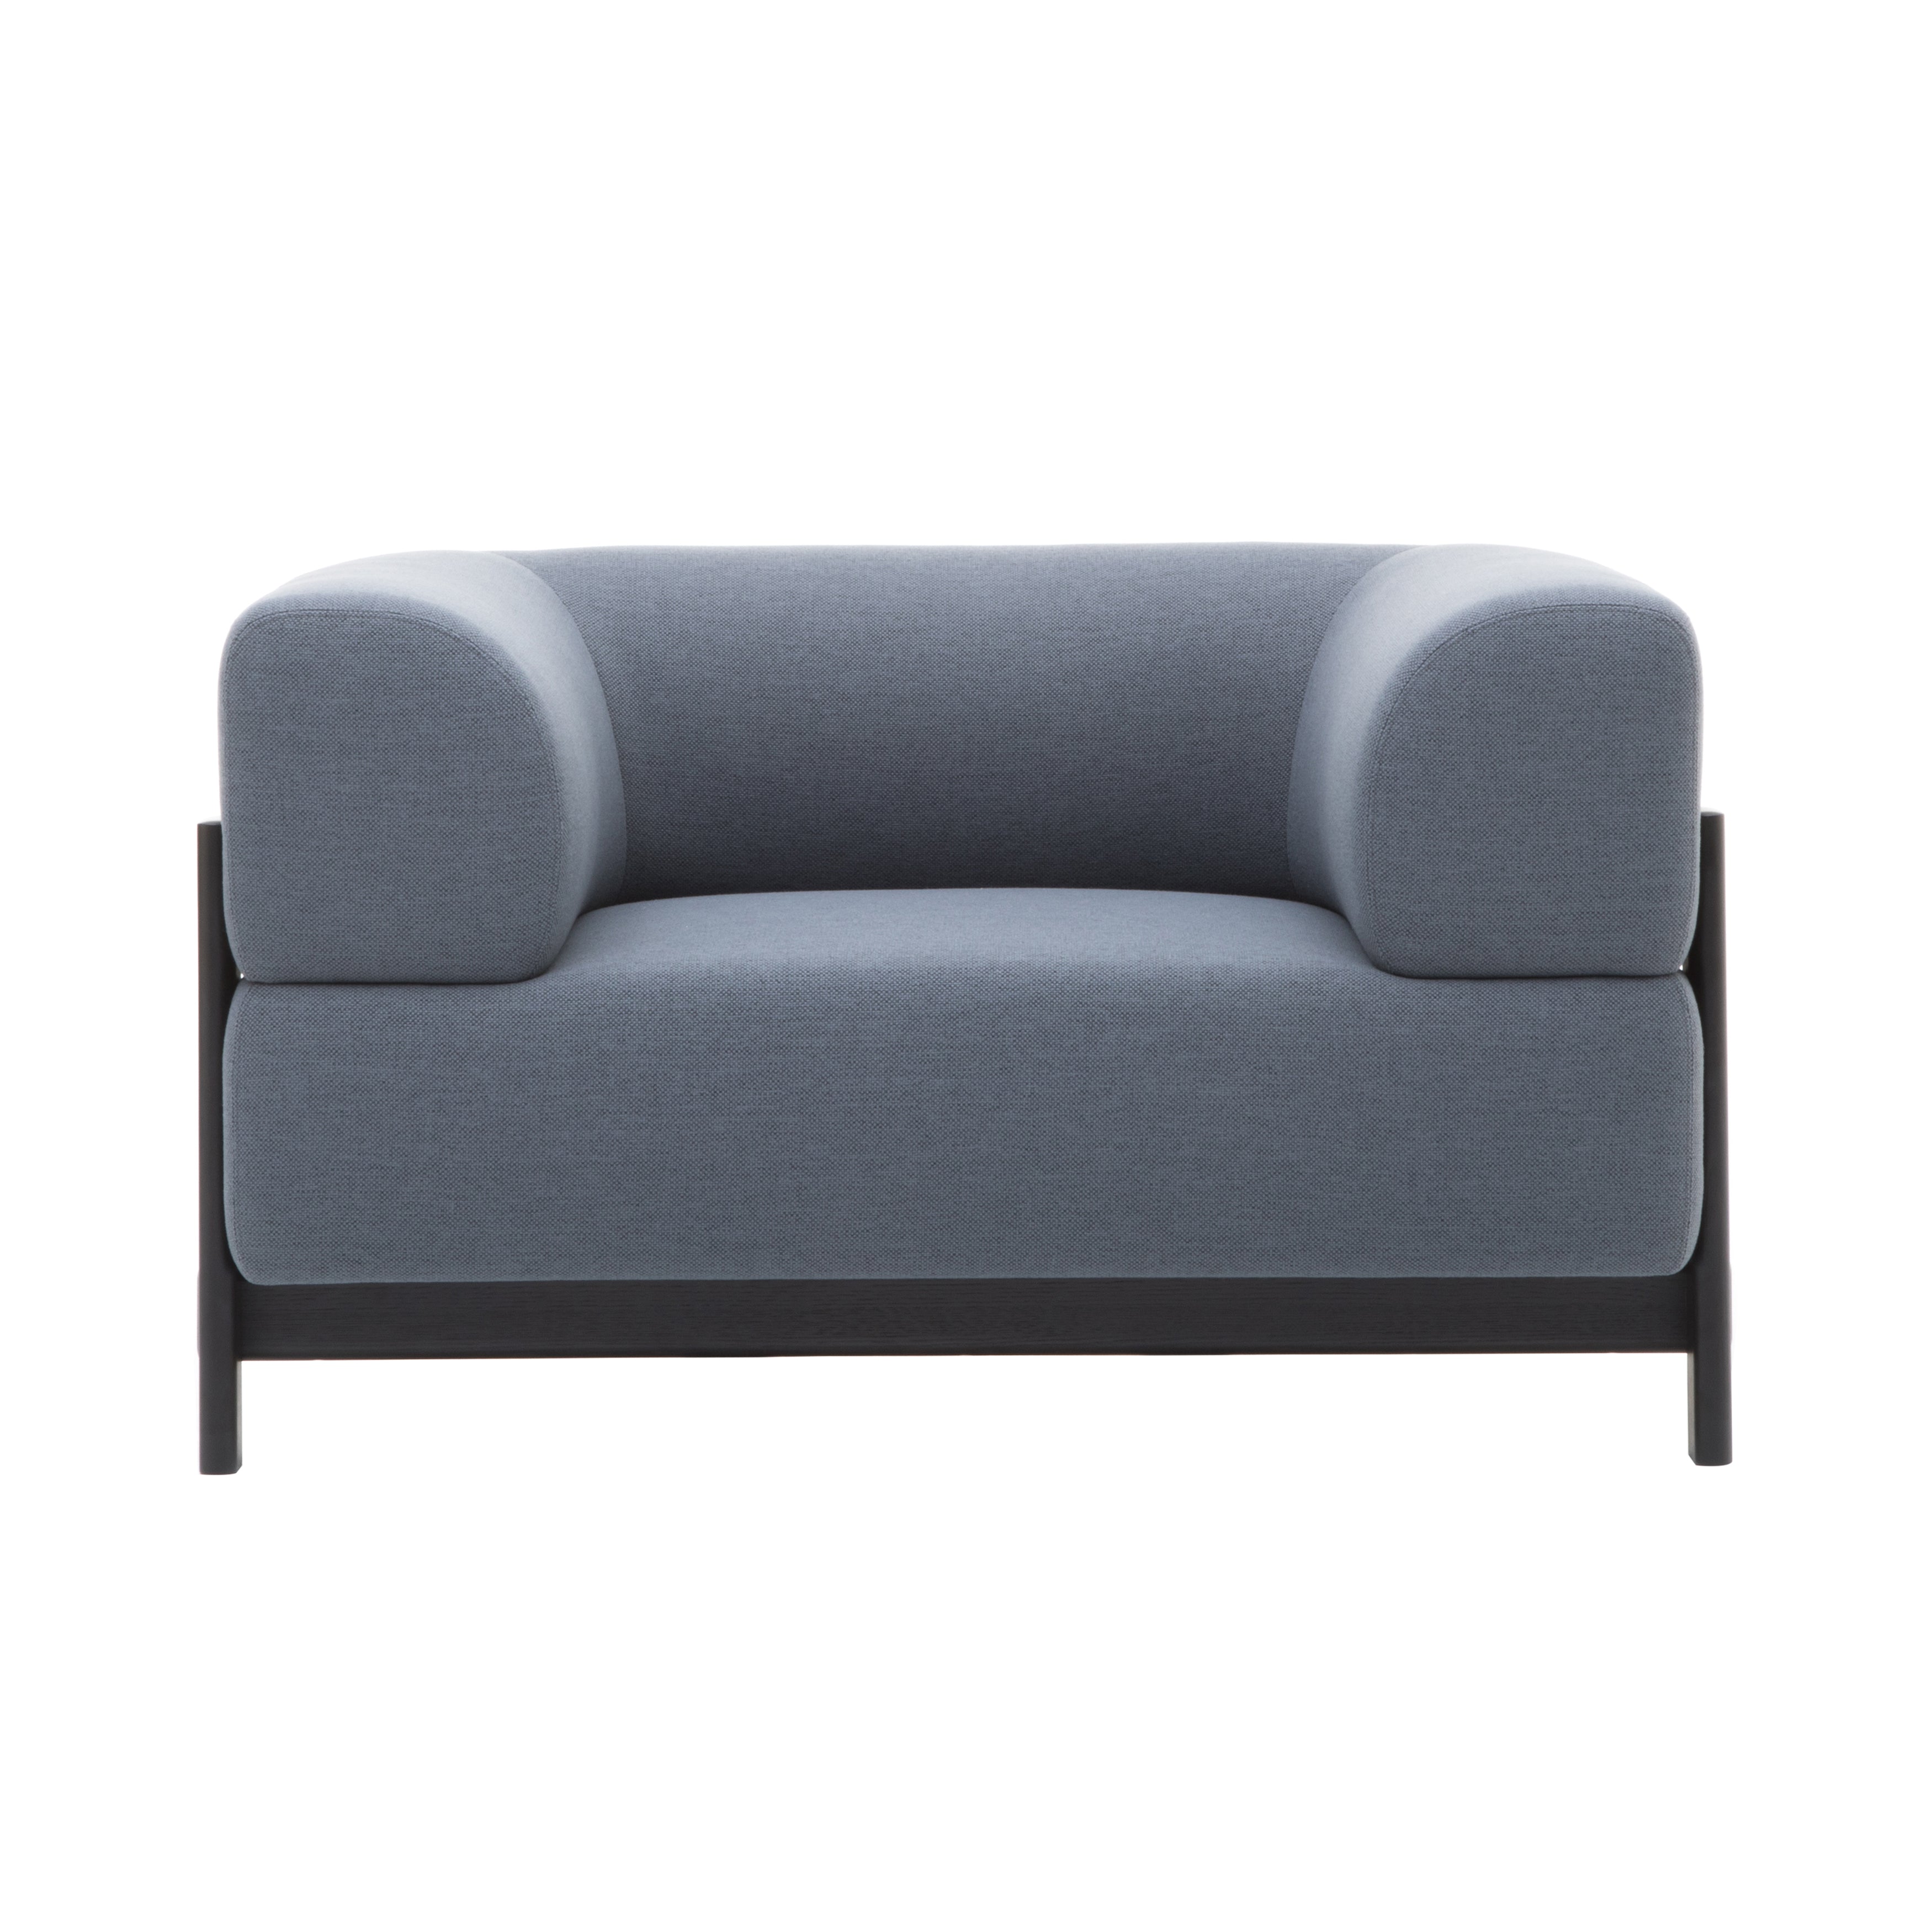 Elephant 1 Seater Sofa: Black